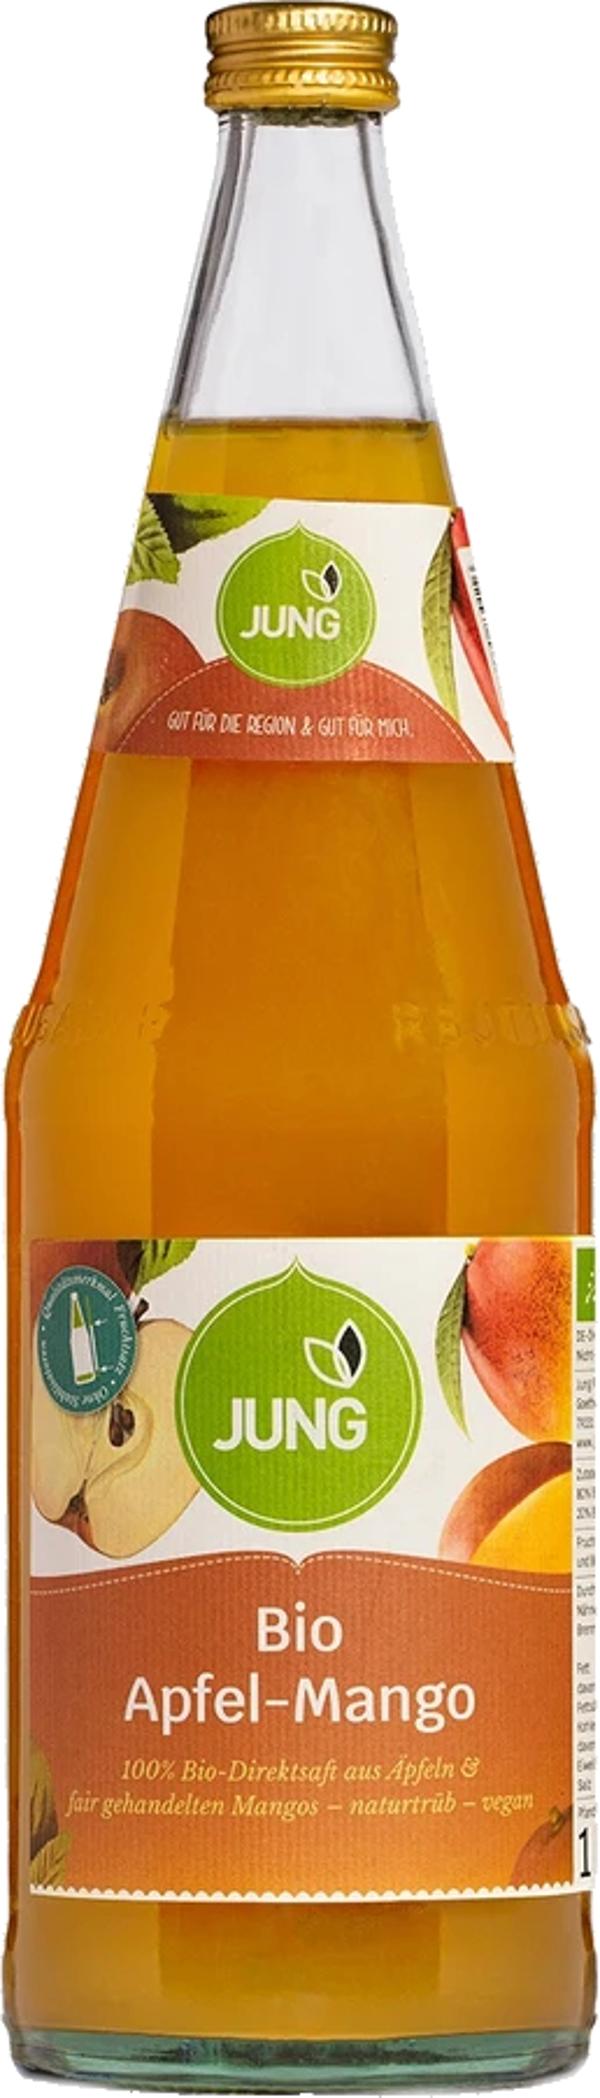 Produktfoto zu Apfel-Mangosaft